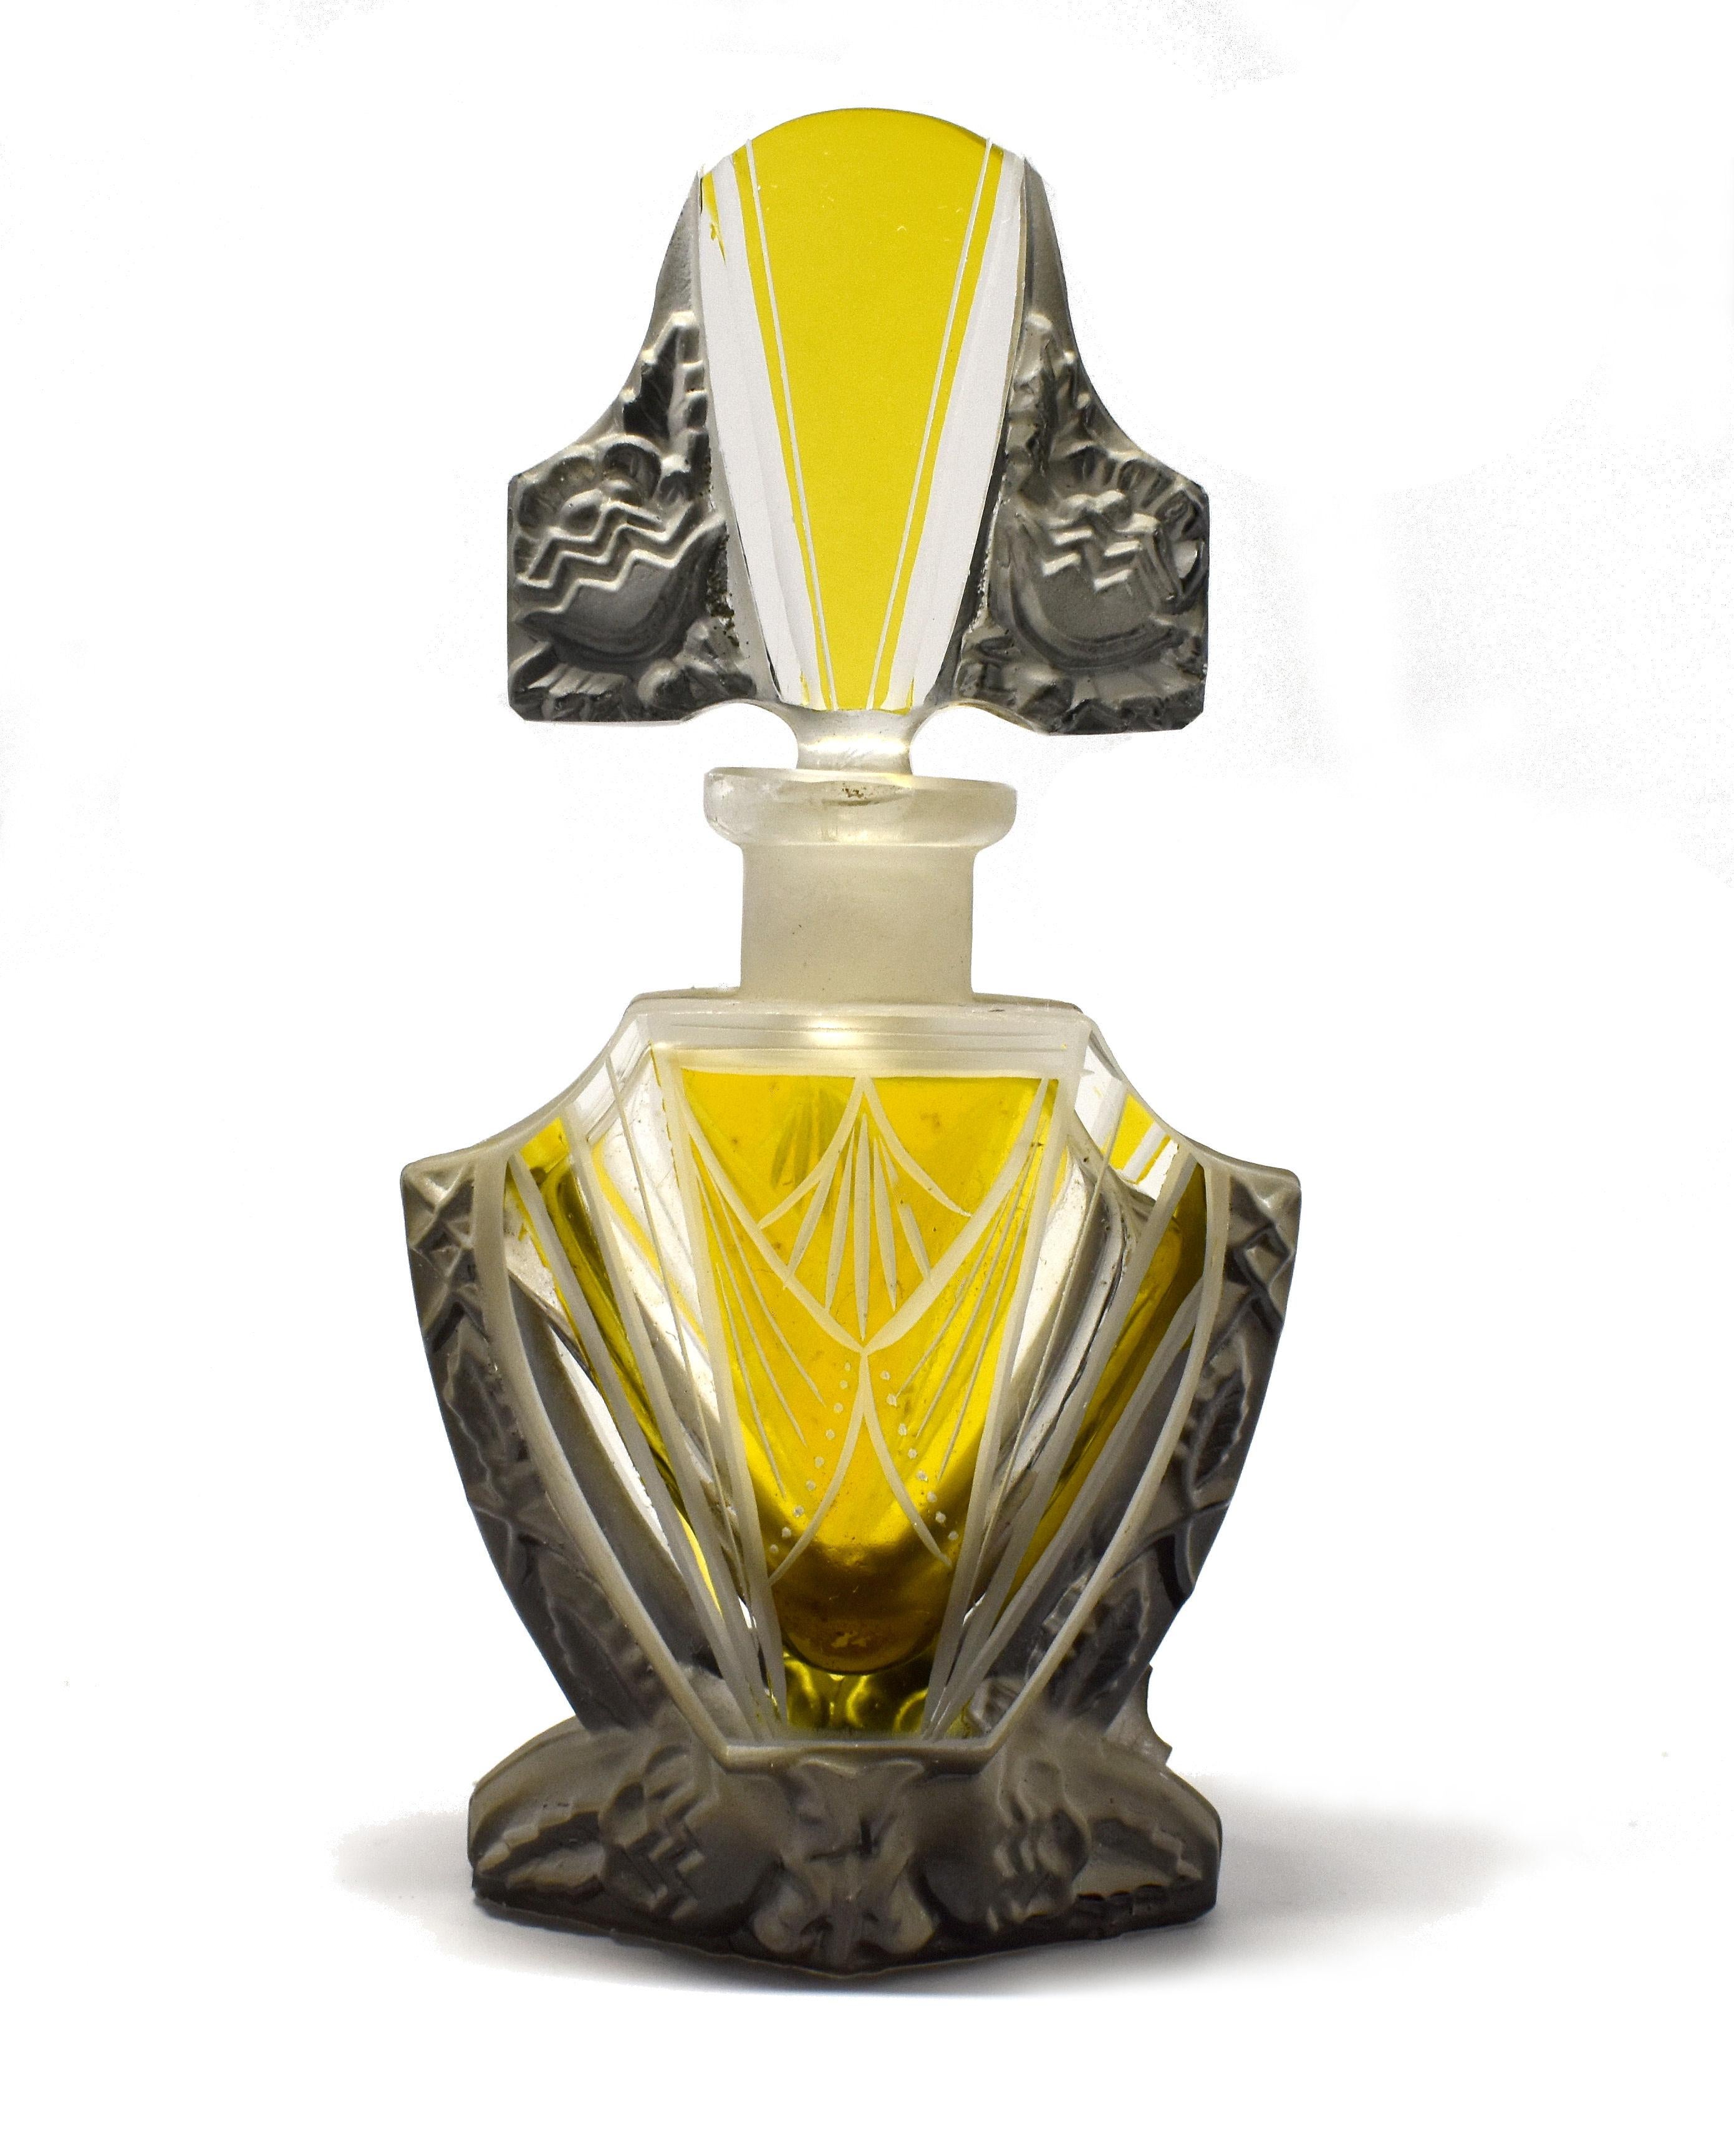 Enameled Art Deco Perfume Bottle by Schlevogt & Hoffman, circa 1930